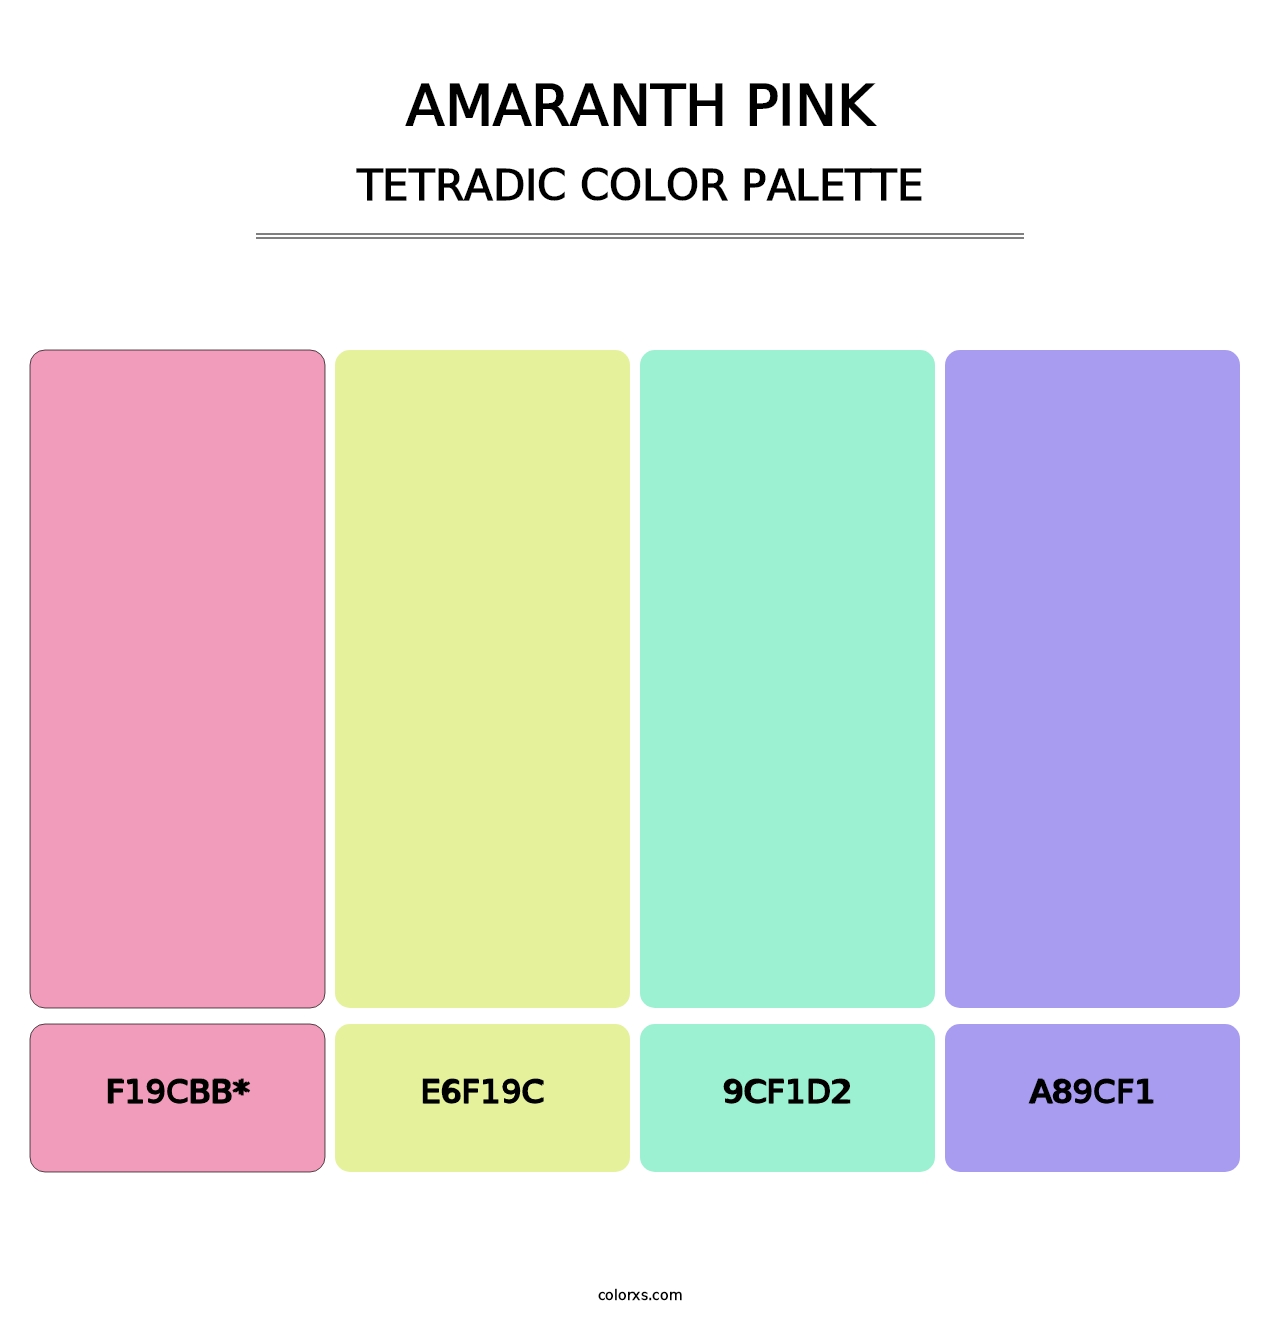 Amaranth Pink - Tetradic Color Palette